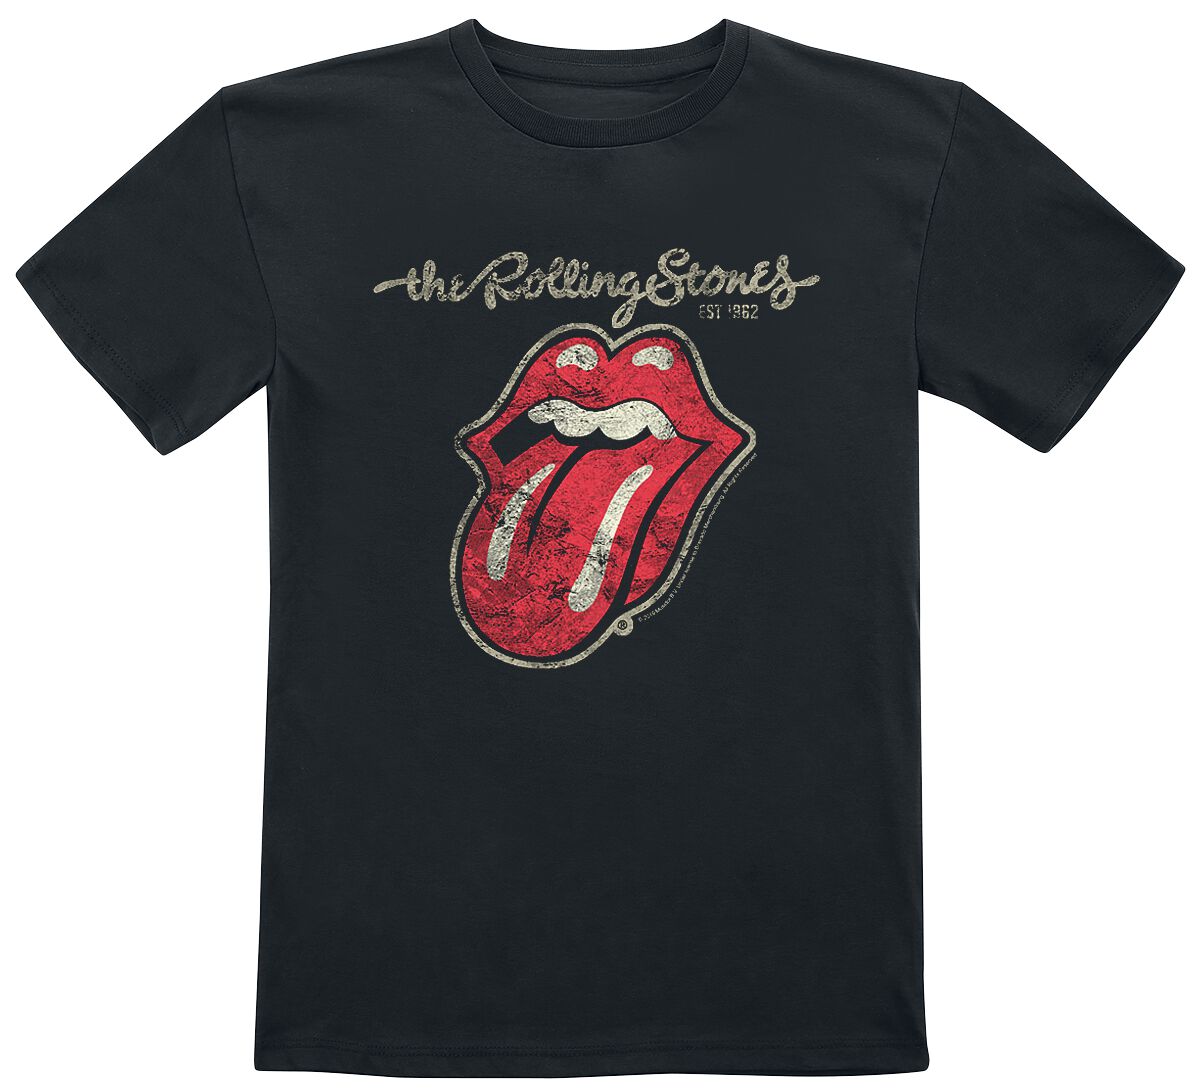 The Rolling Stones Metal-Kids - Classic Tongue T-Shirt schwarz in 128